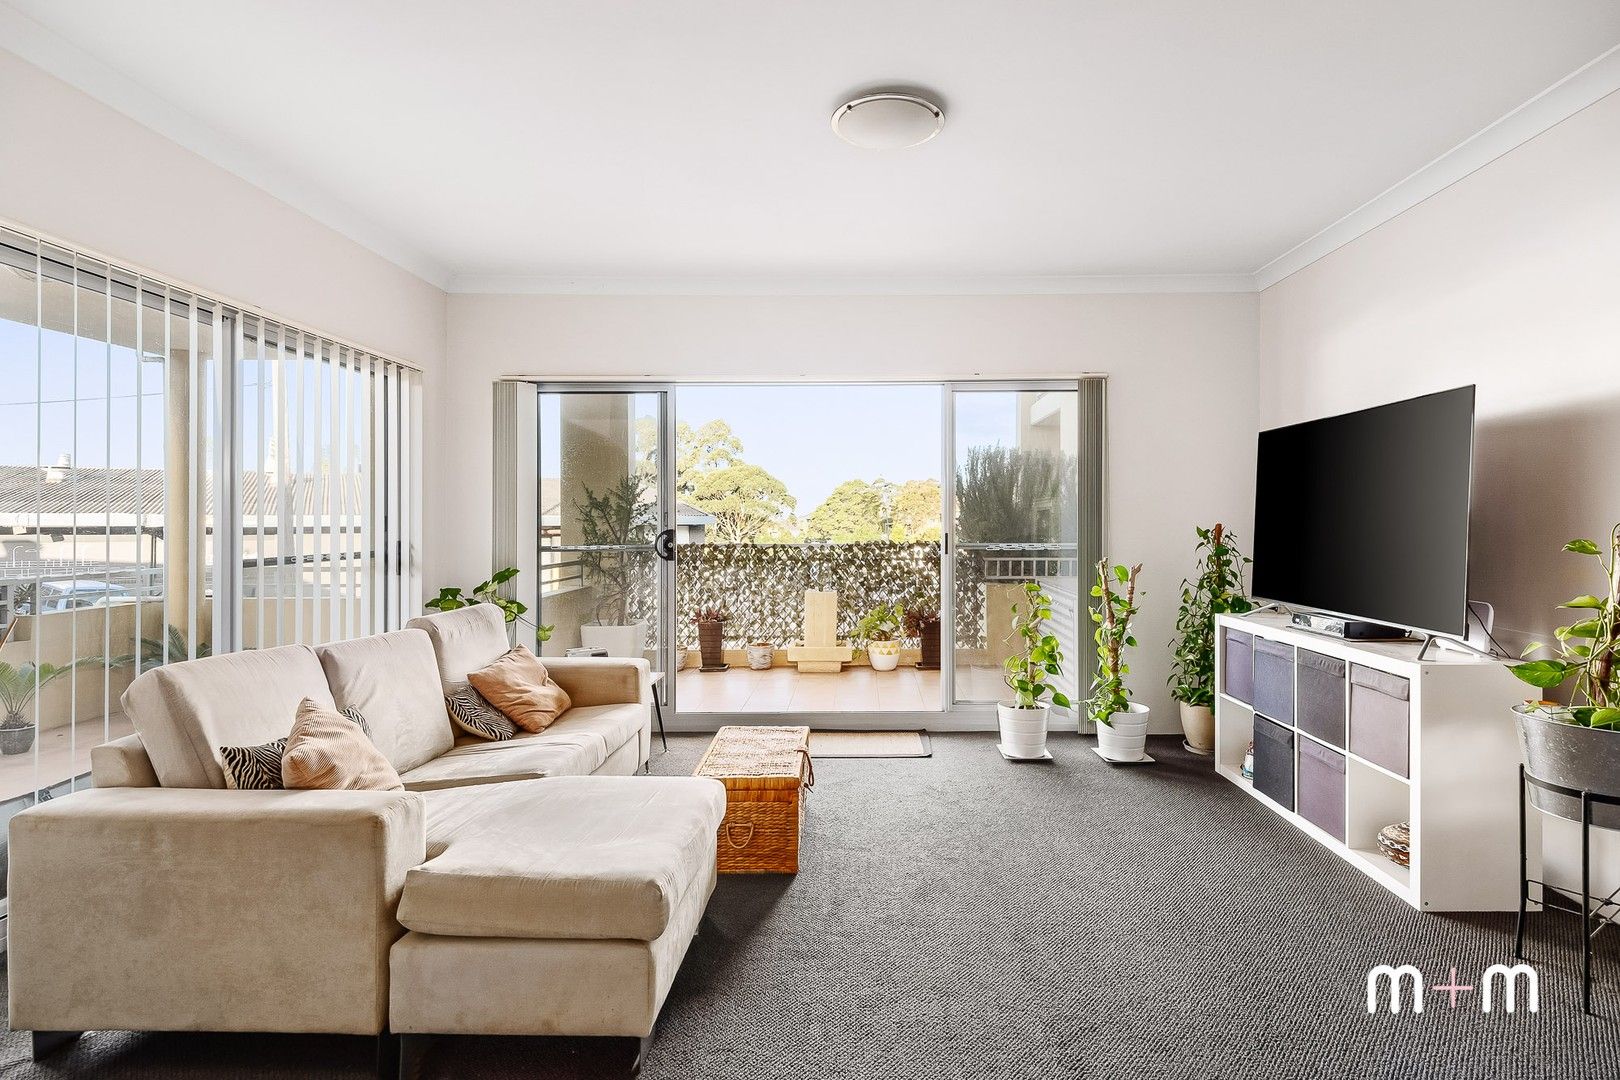 2 bedrooms House in 3/377 Princes Highway WOONONA NSW, 2517